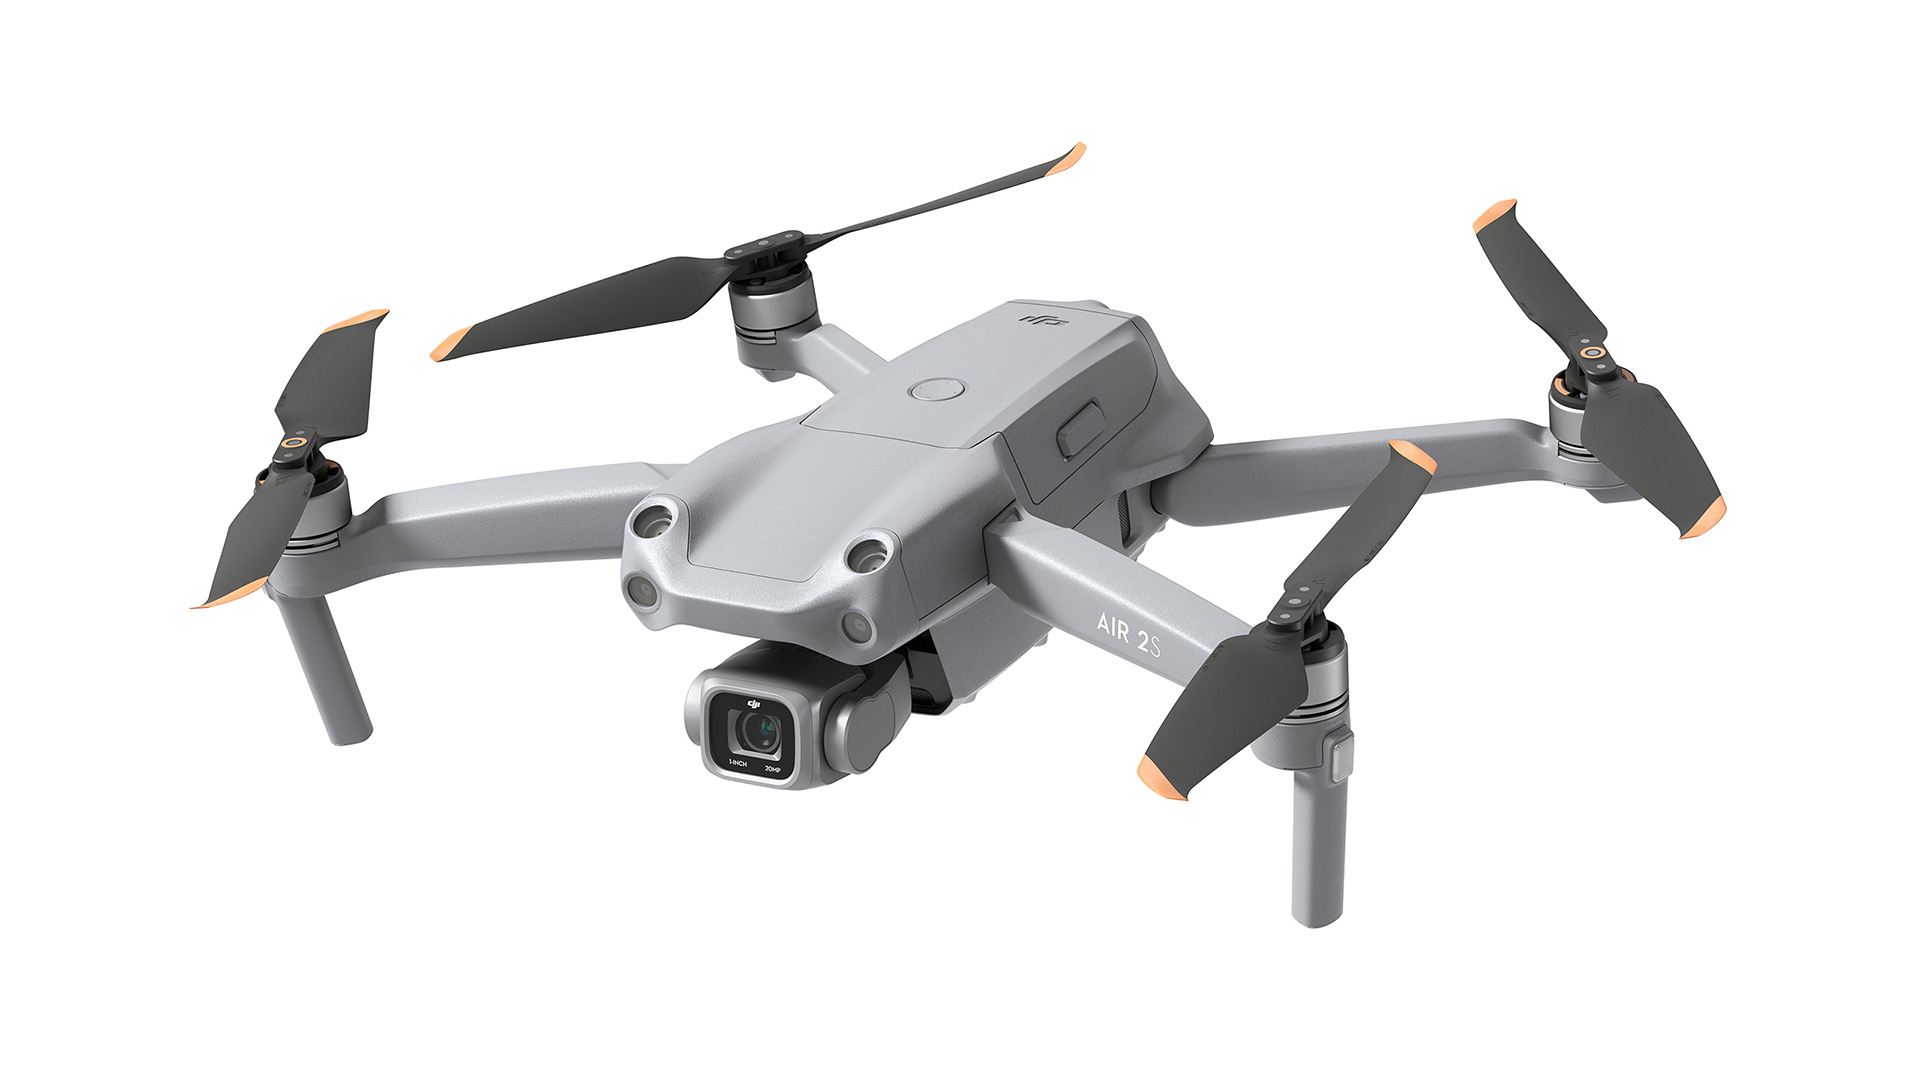 The DJI Air S2 drone